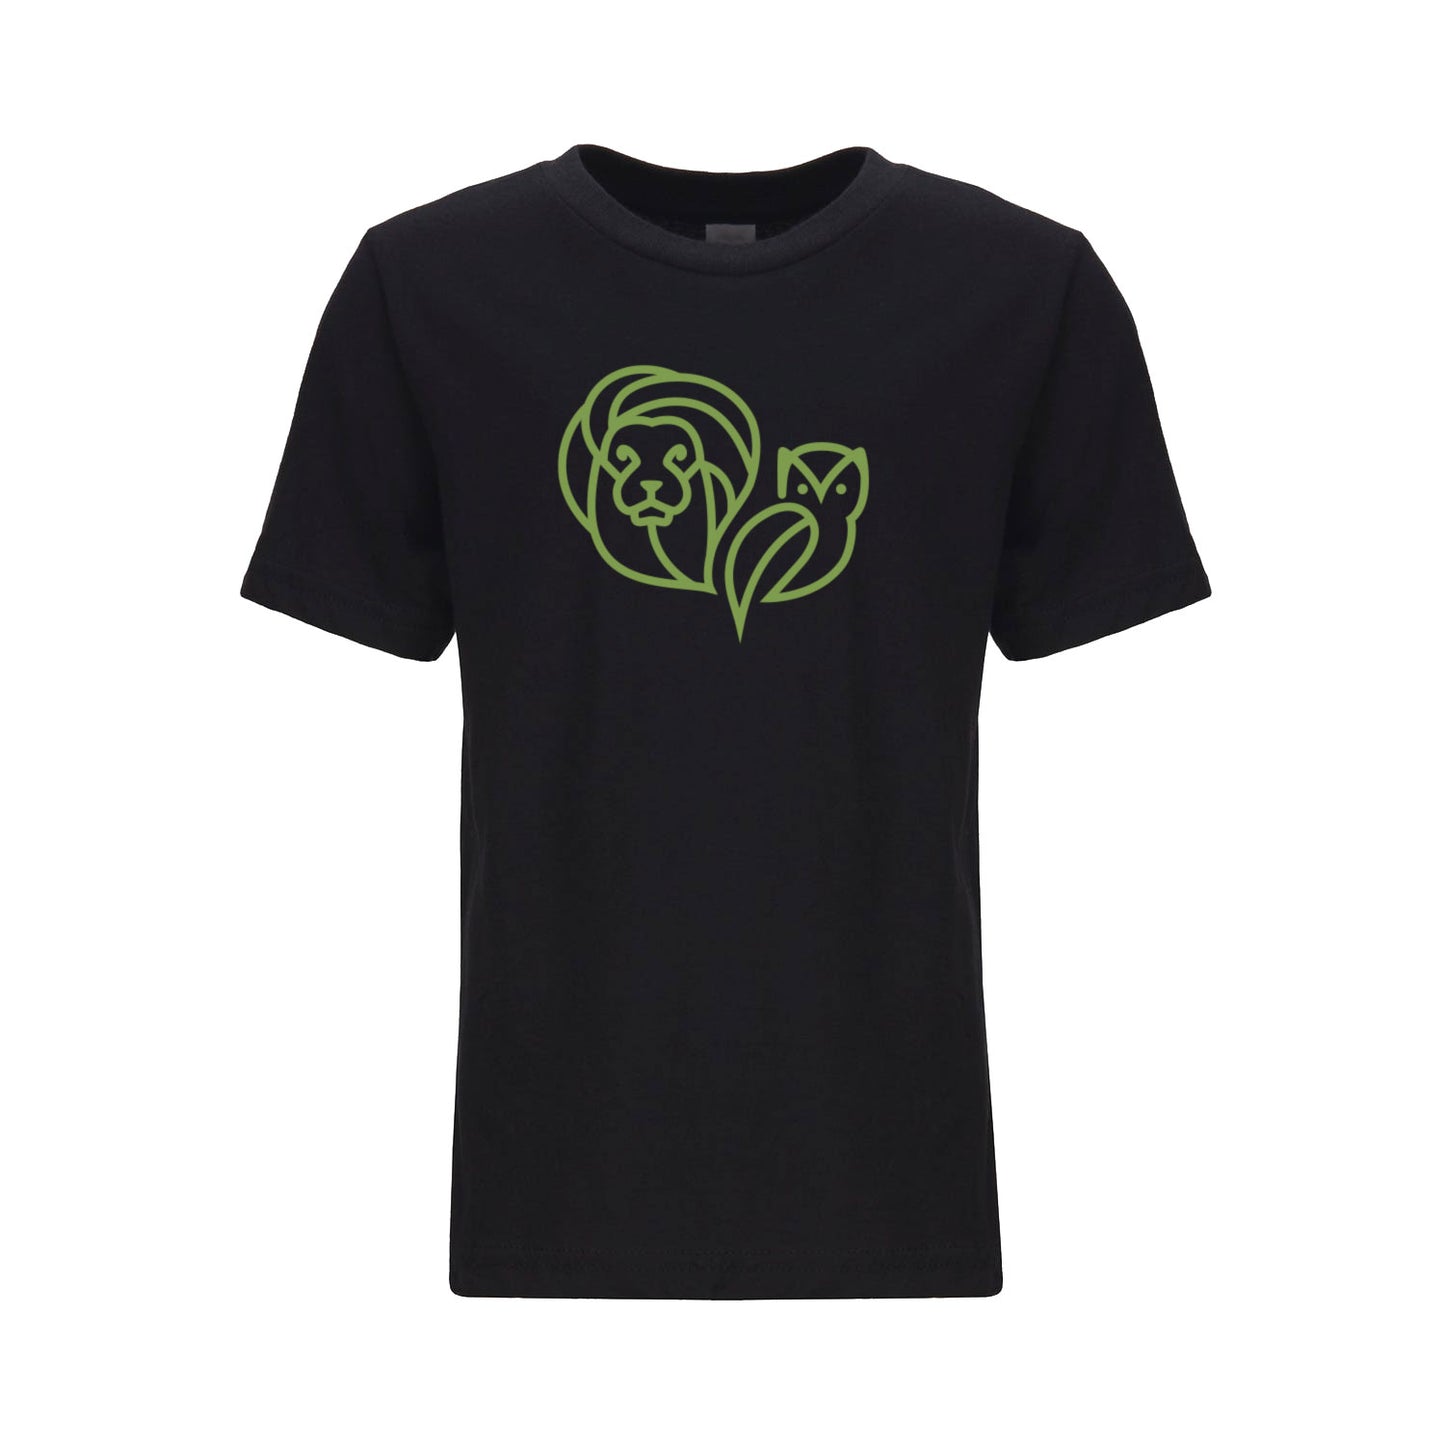 KIDS Super Soft Logo T-Shirt Black - The Lion and The Owl